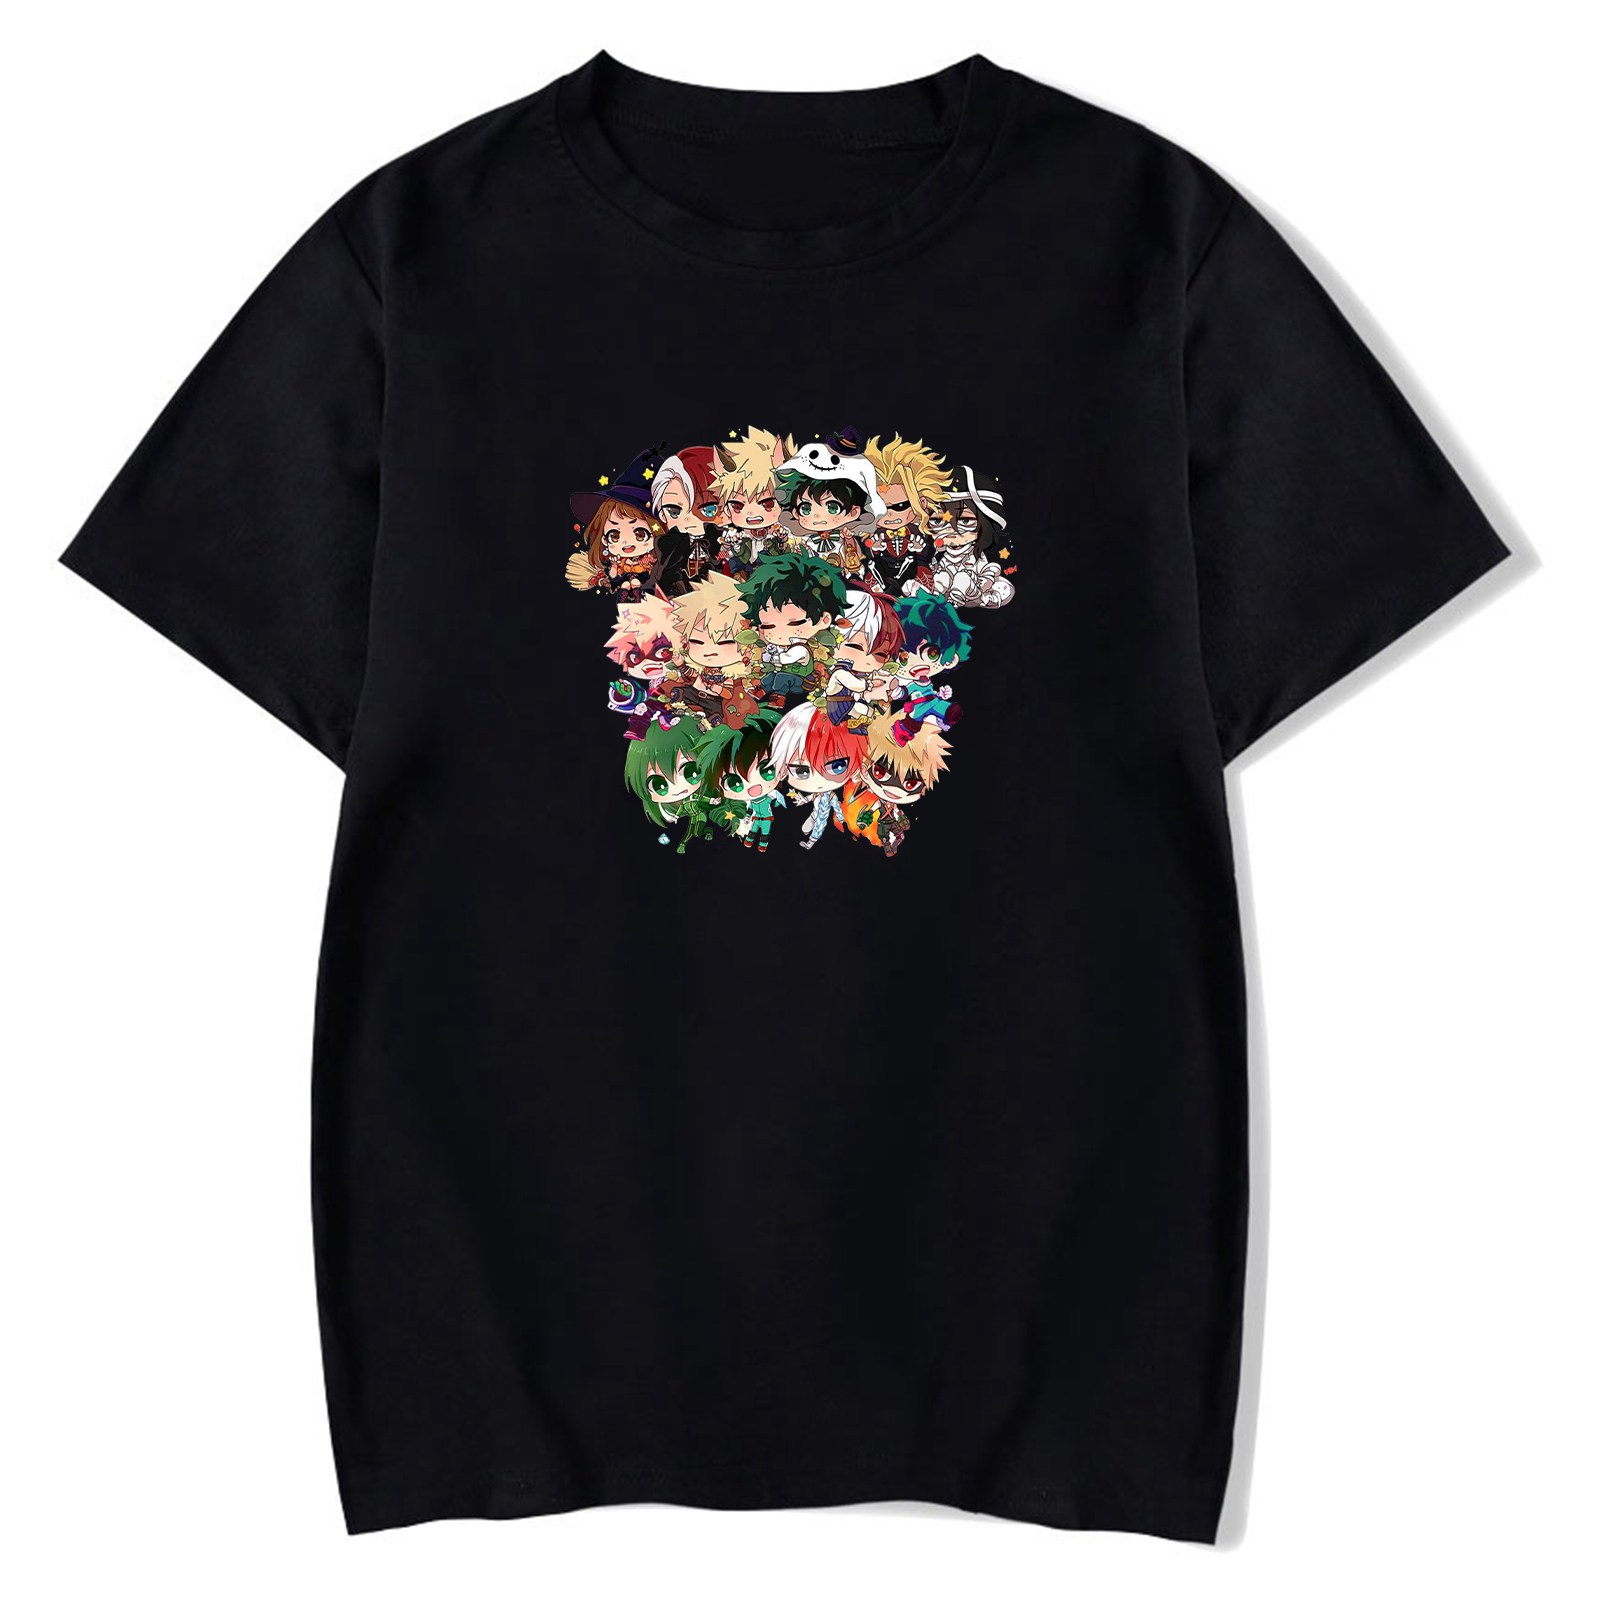 SOSPIRO Unisex My Hero Academia T Shirts Midoriya Bakugo Cosplay with Baseball Cap Sun Hat & 50pcs Anime Academia Stickers Gifts Set(Black-M) - image 4 of 7